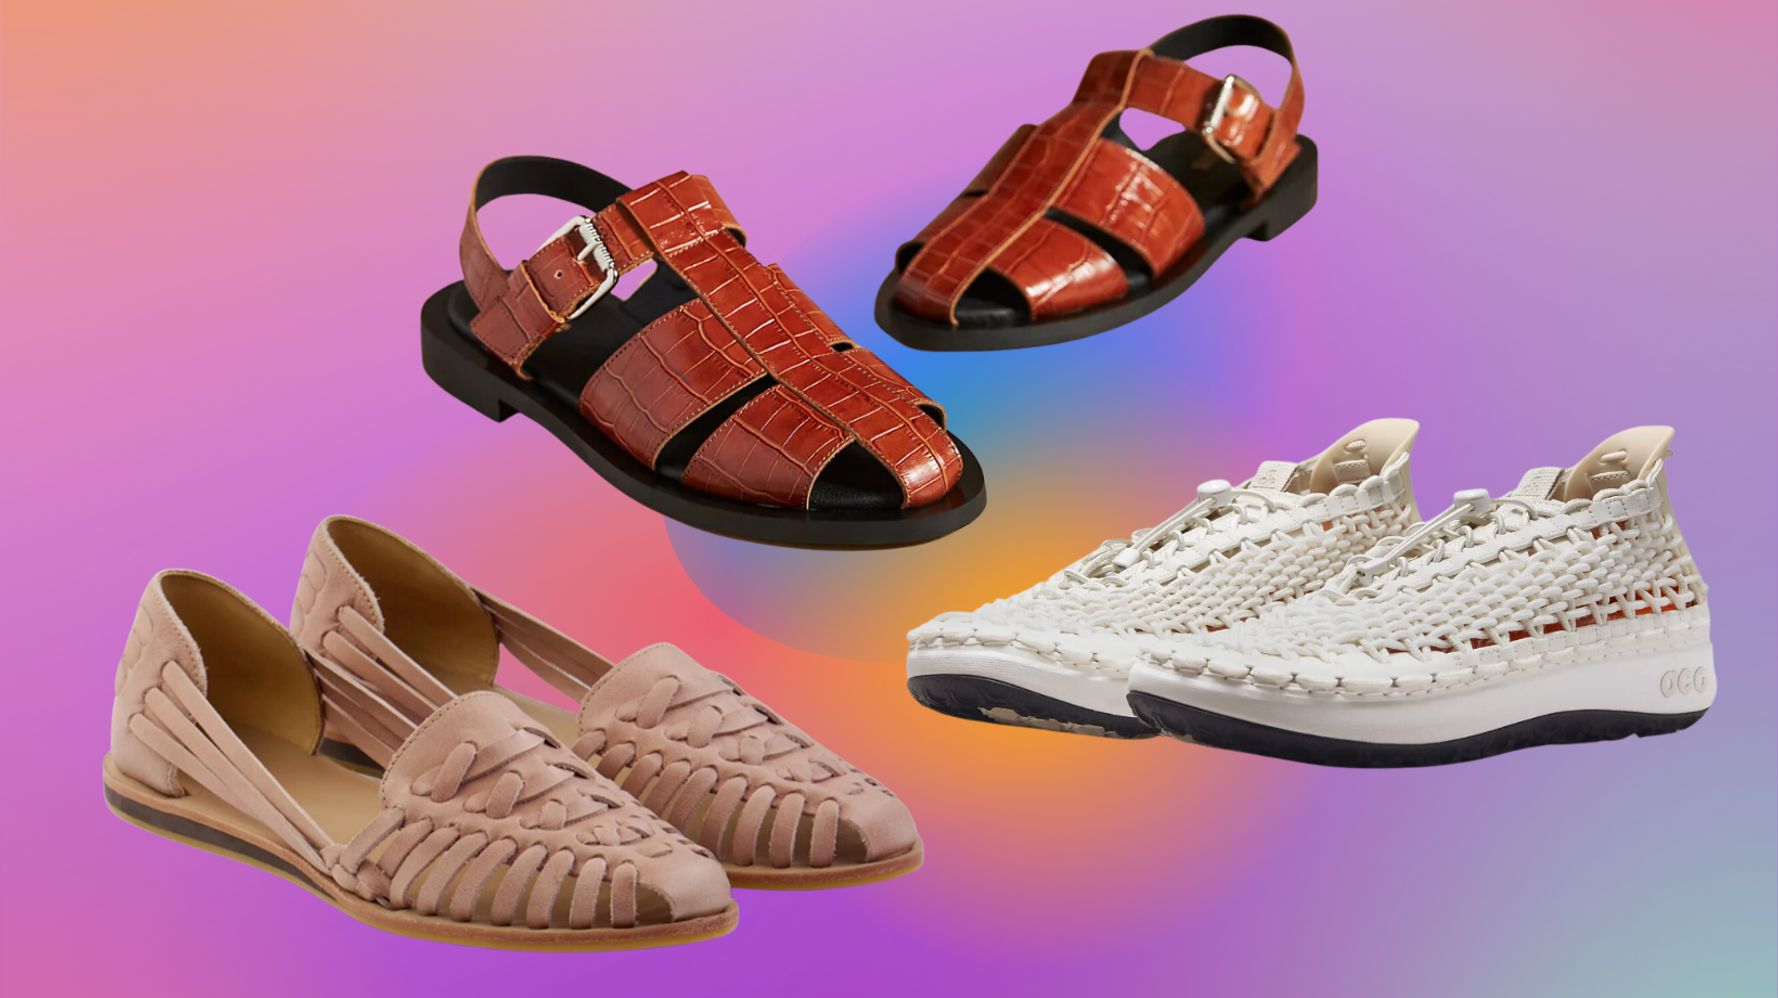 The magic of the Internet  Slides sandals, Sandals, Shoes